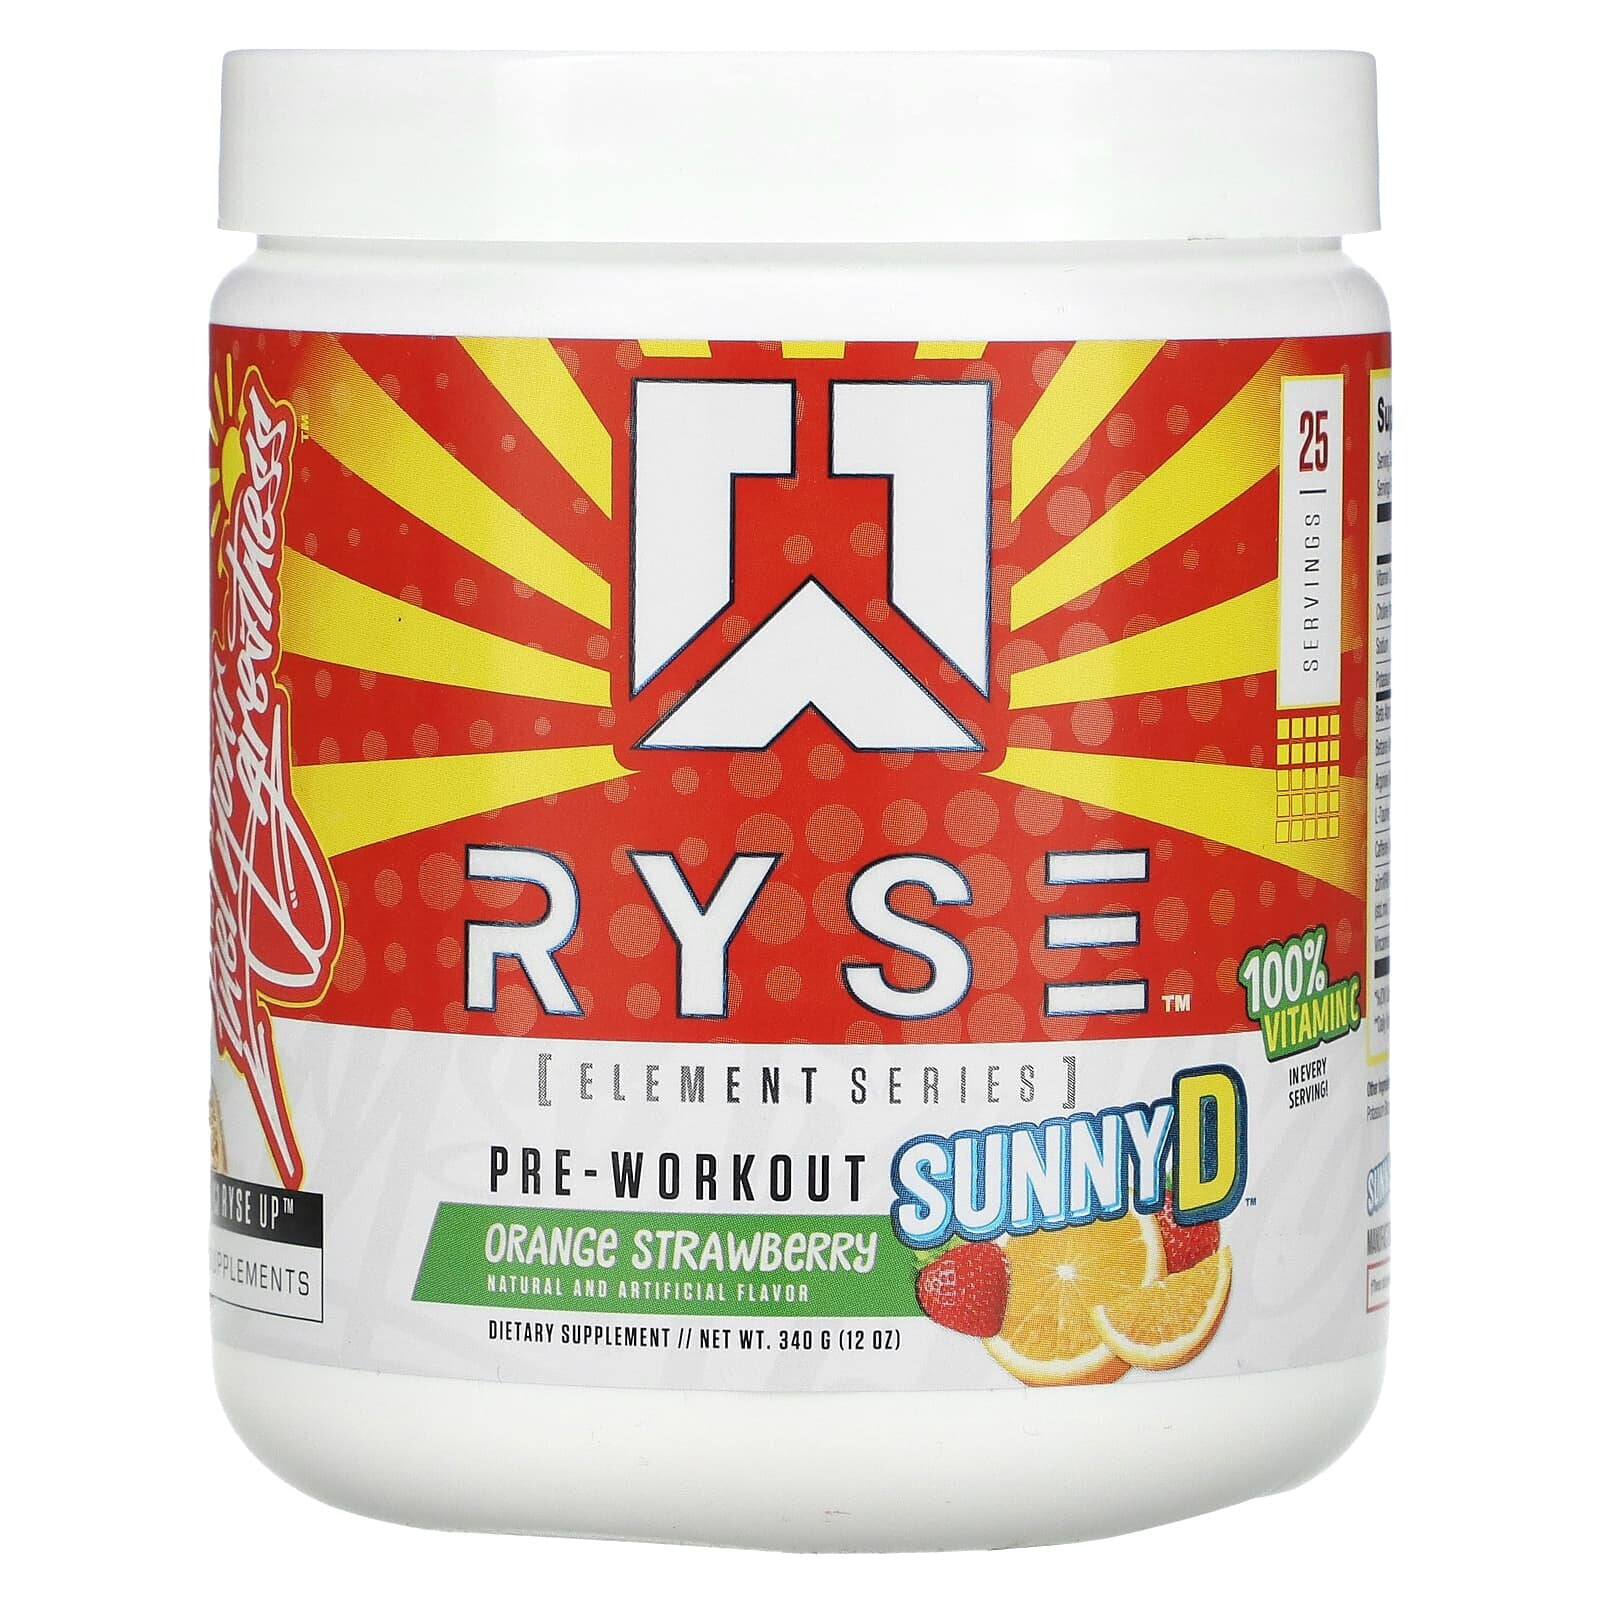 Ryse Supps, Element Series, Pre-Workout, Sunny D, Orange Strawberry, 12 oz (340 g)